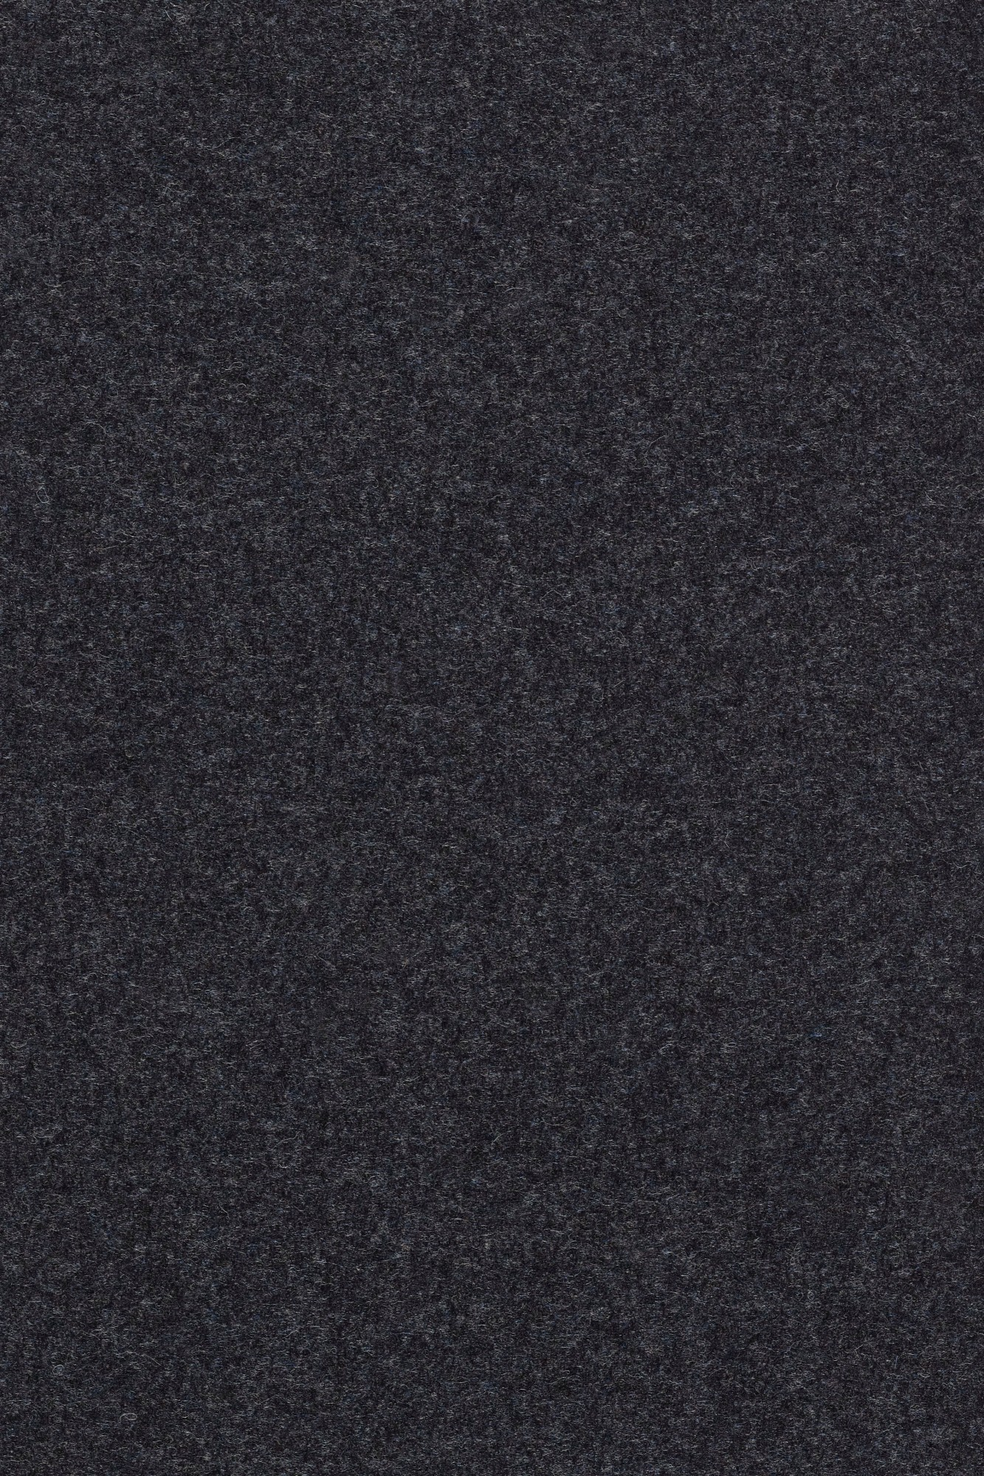 Fabric sample Divina MD 193 black